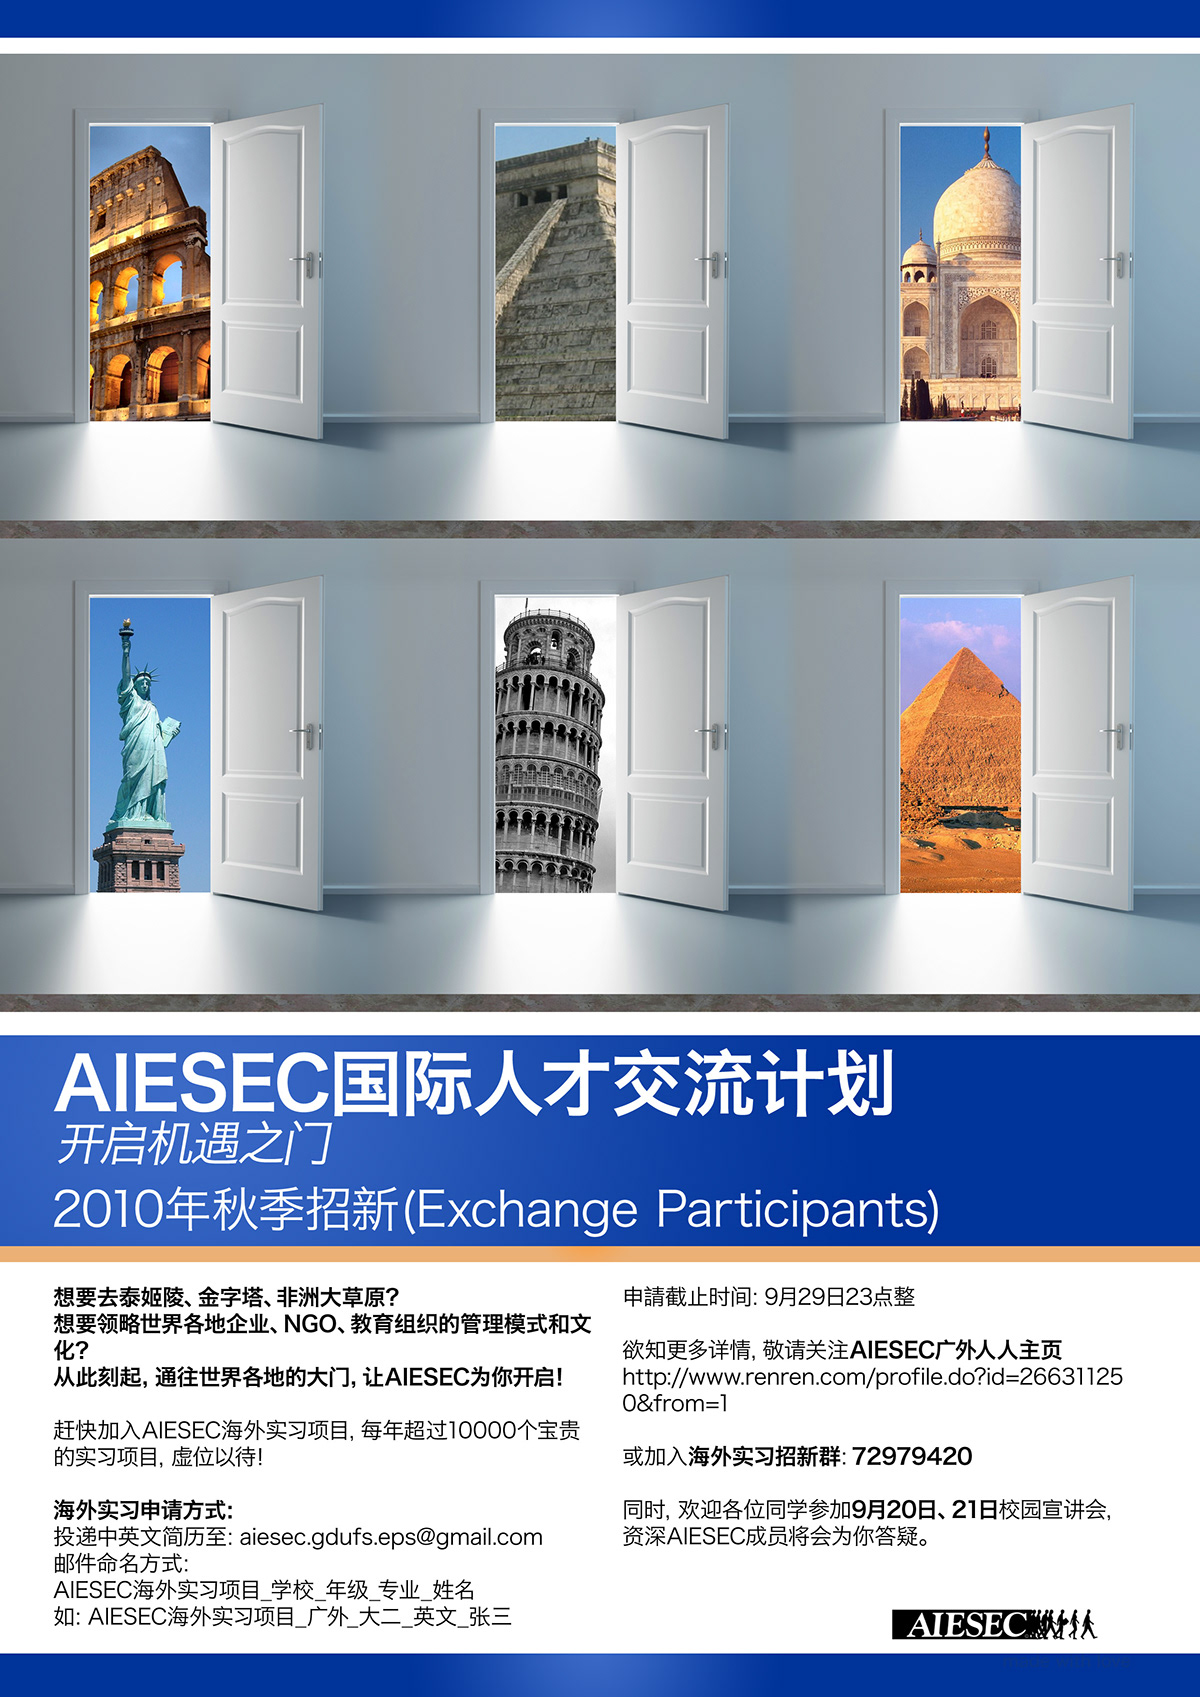 AIESEC exchange International